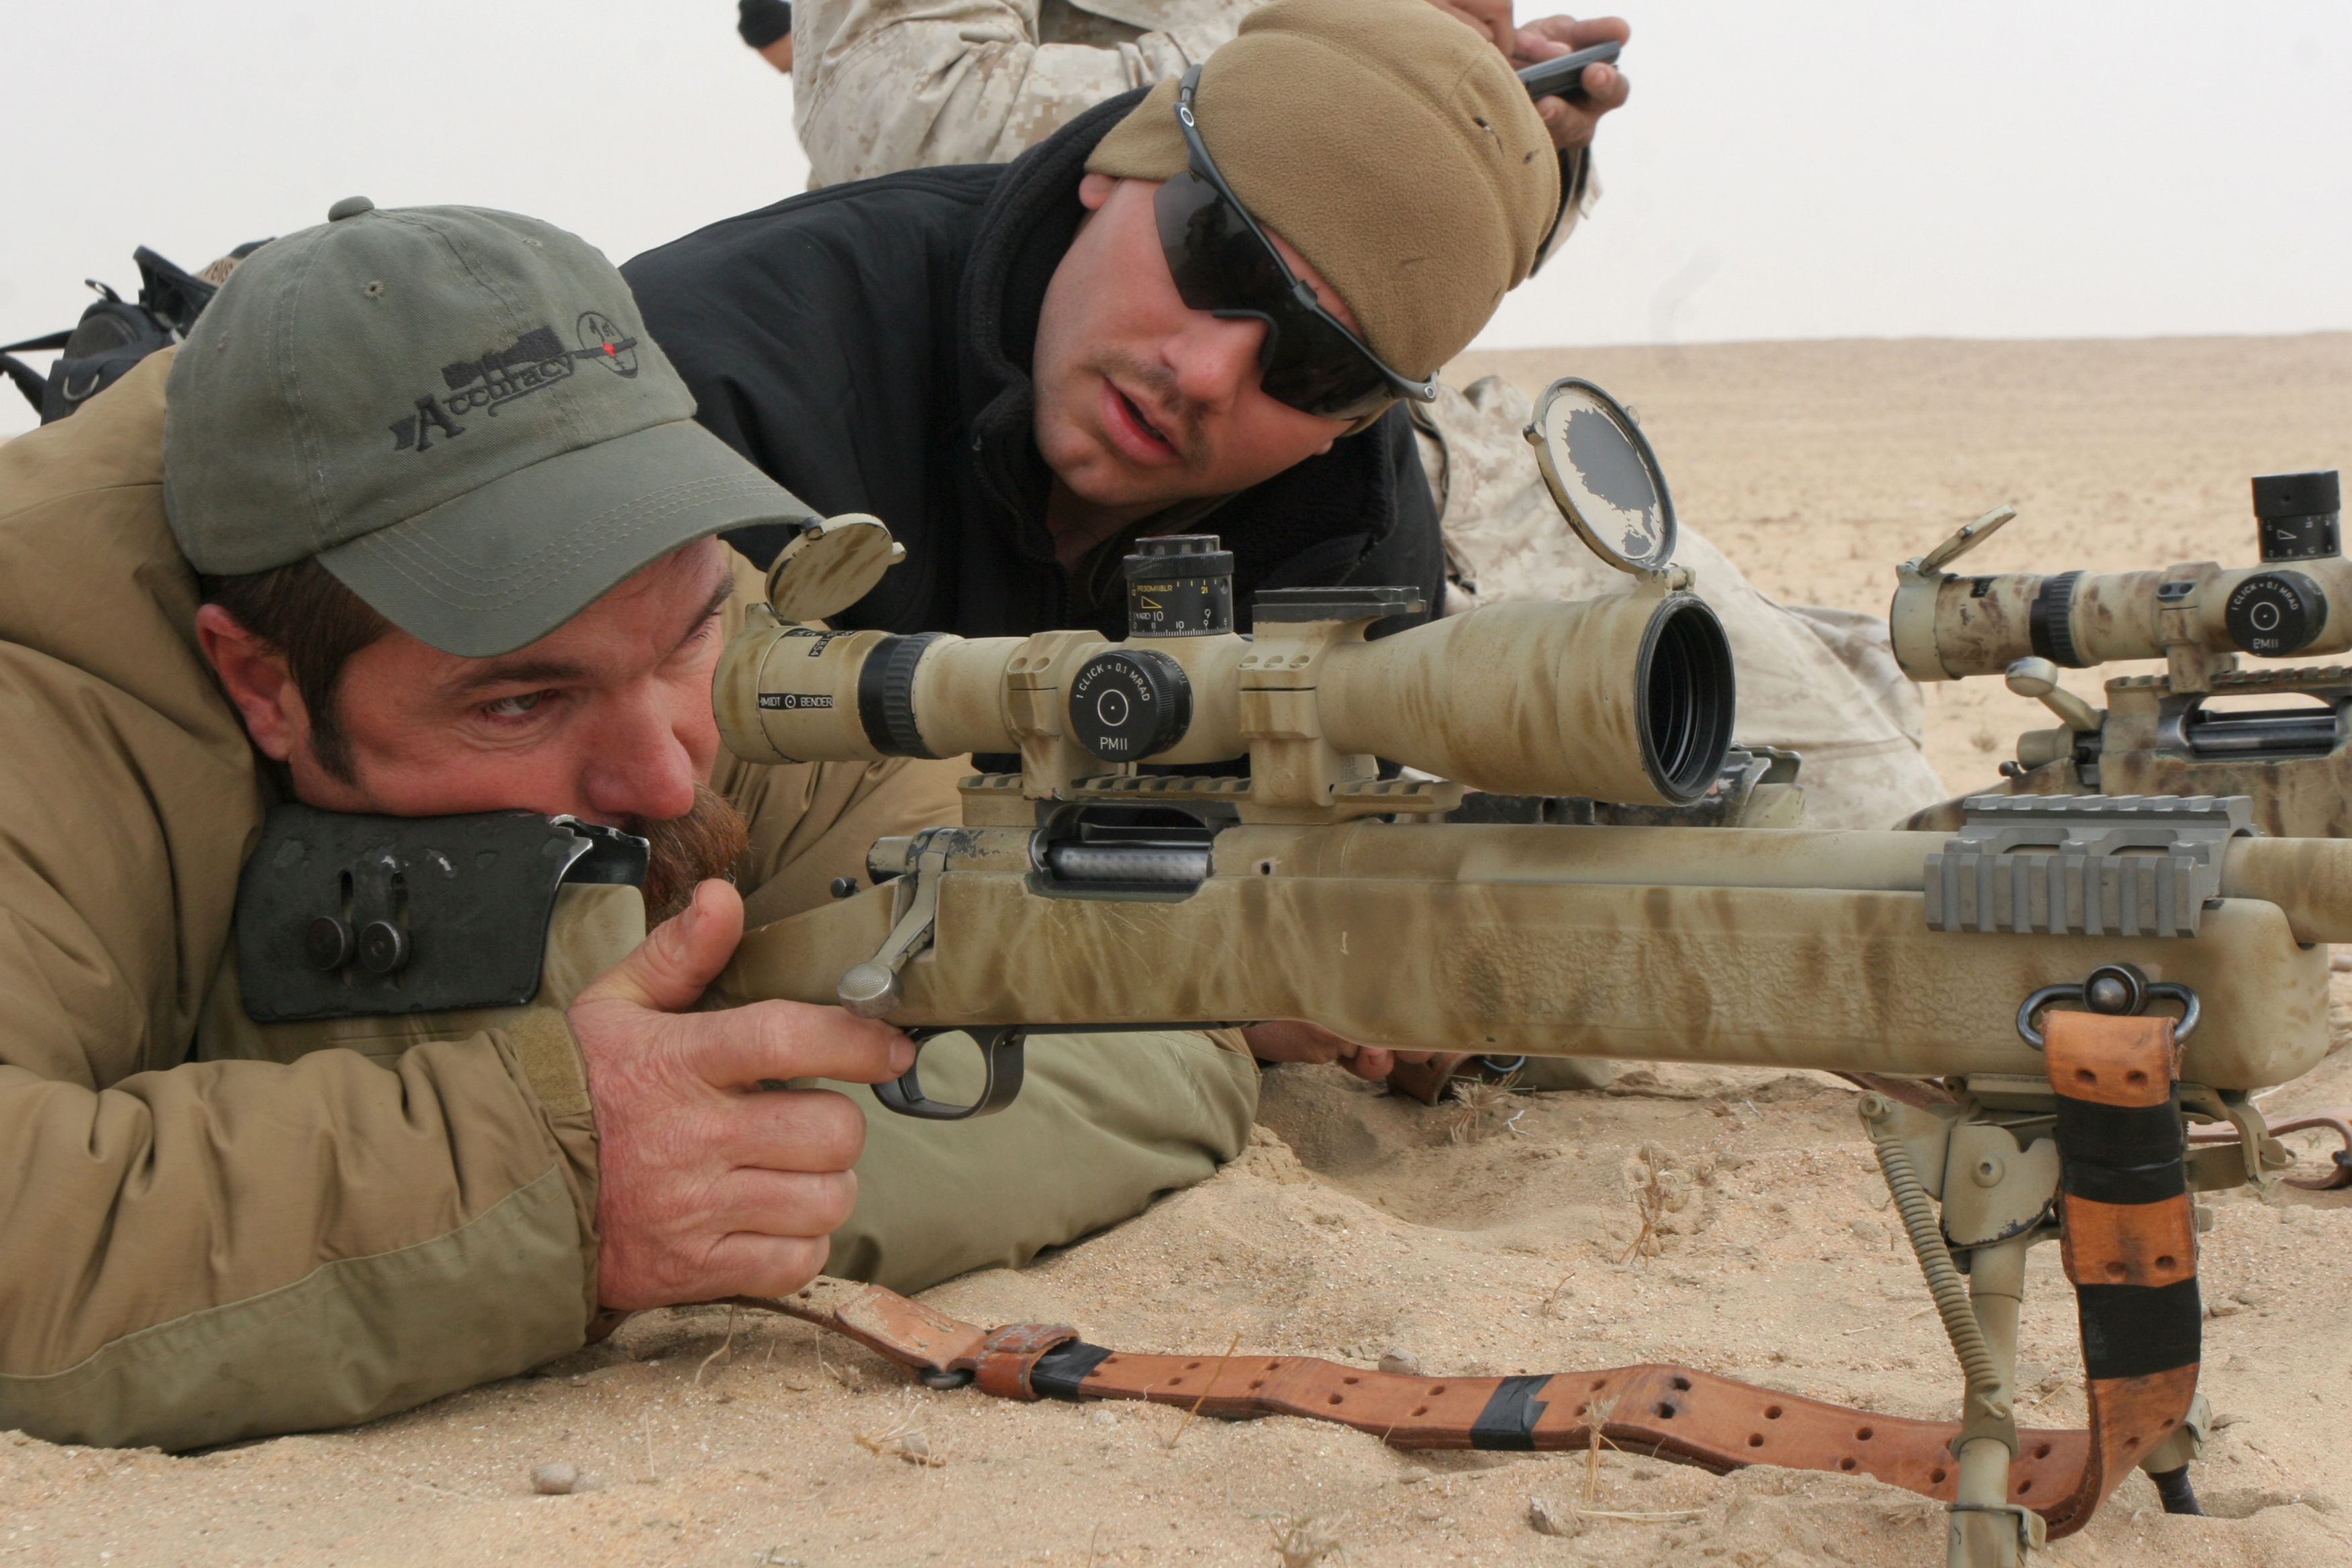 m40 sniper rifle